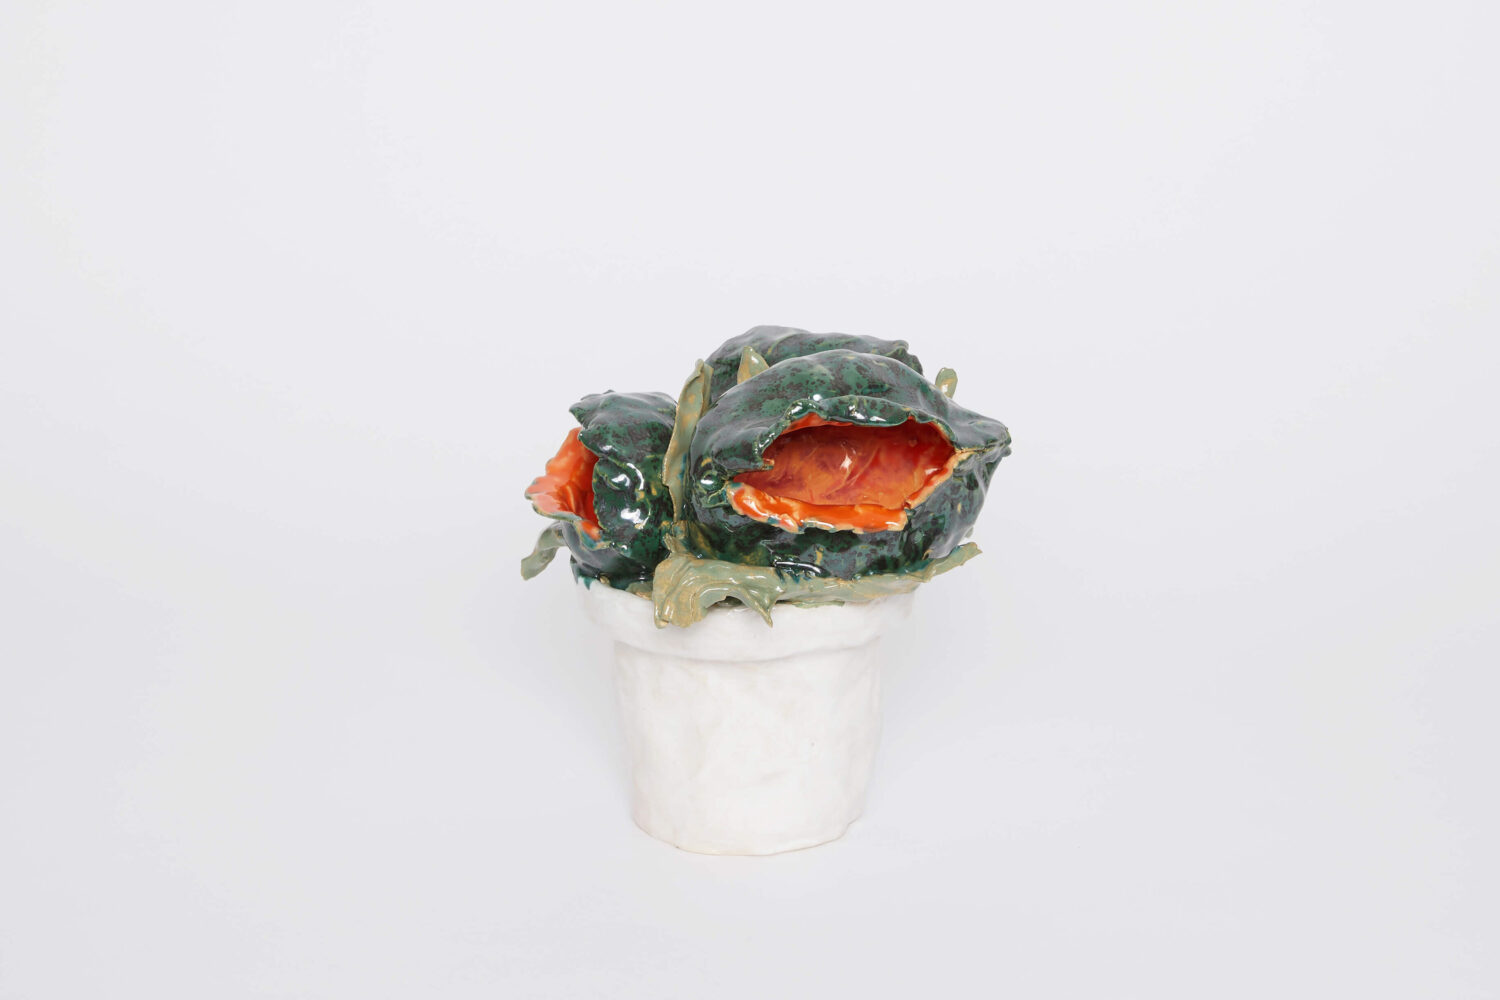 14a Gerrit Frohne Brinkmann 036 Carnivore Glazed ceramics 20x19x18cm 2023 V